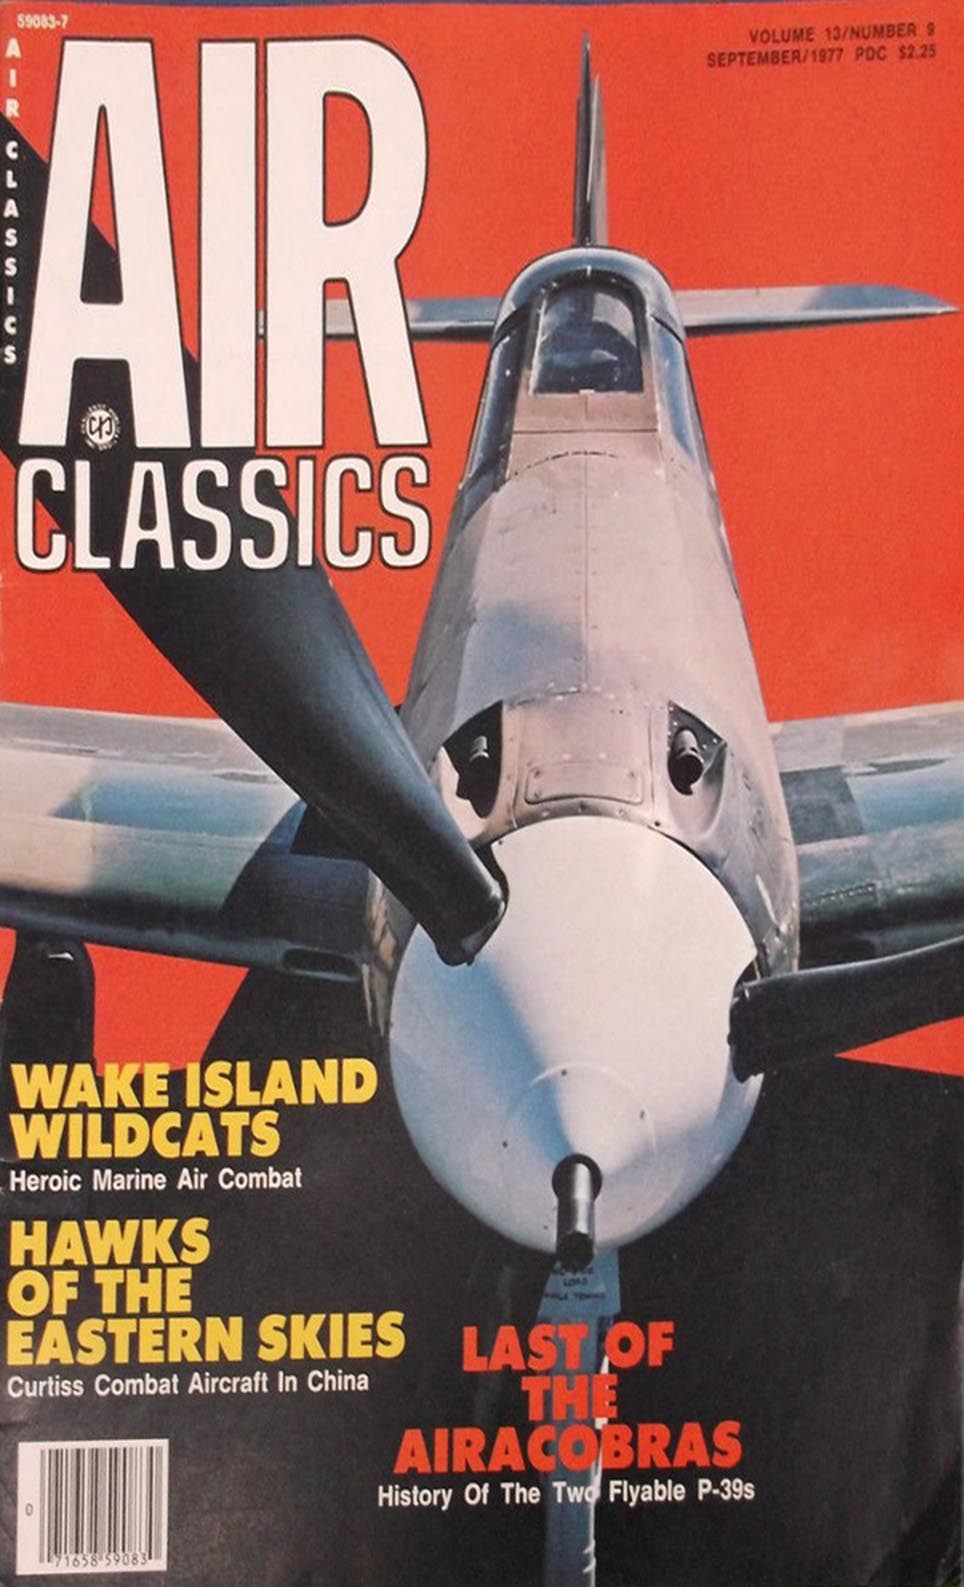 Air Classics September 1977 magazine back issue Air Classics magizine back copy 